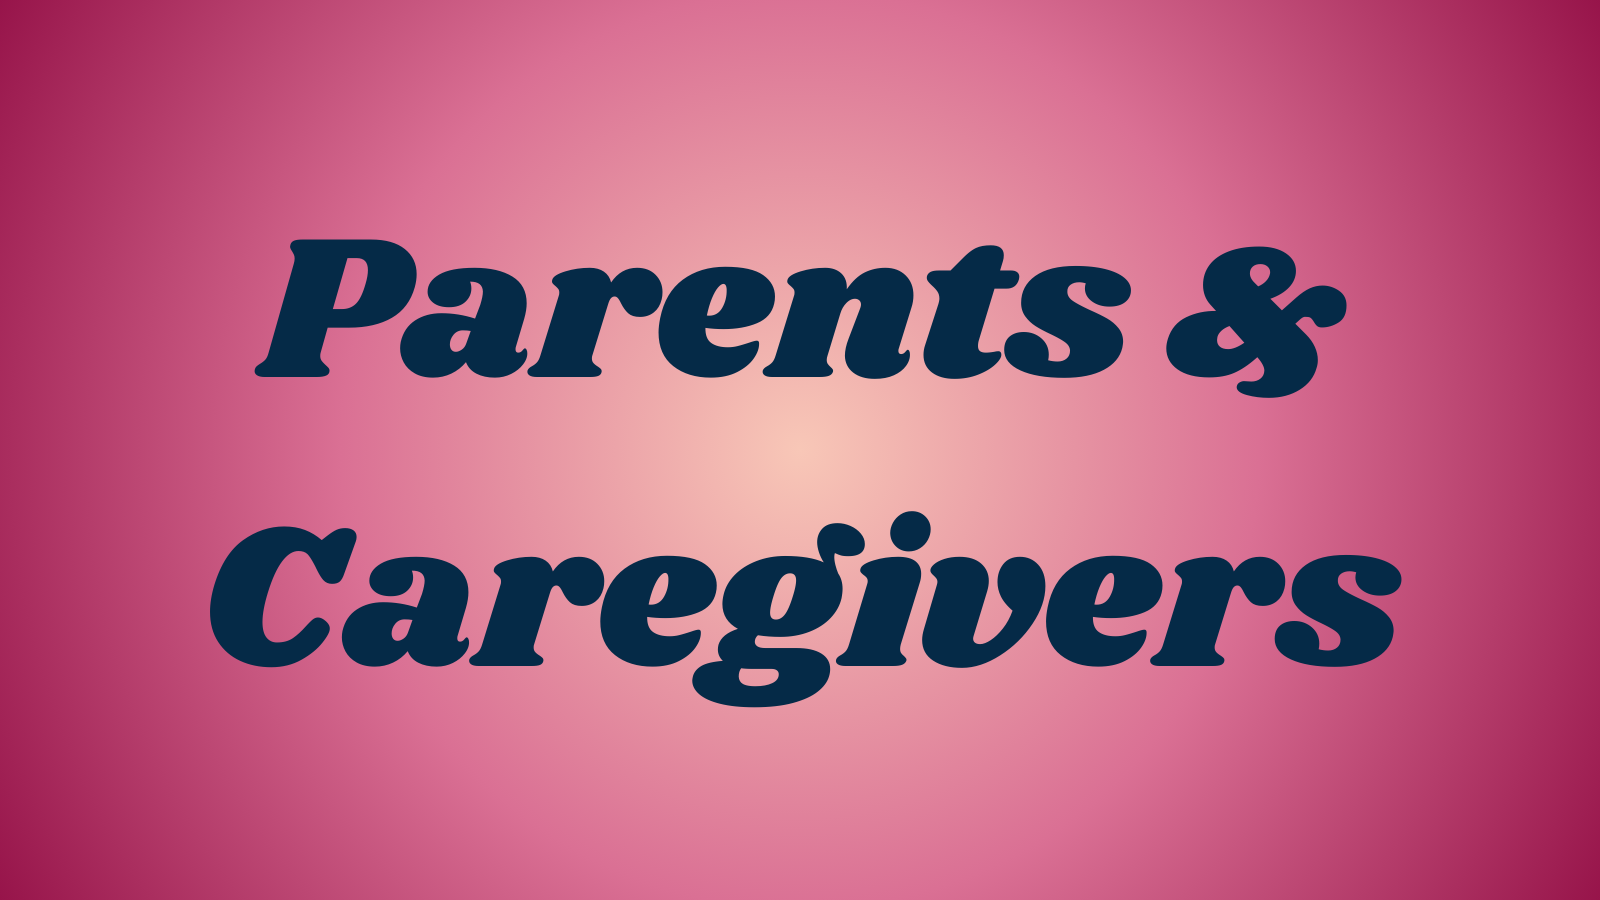 Parents & Caregivers